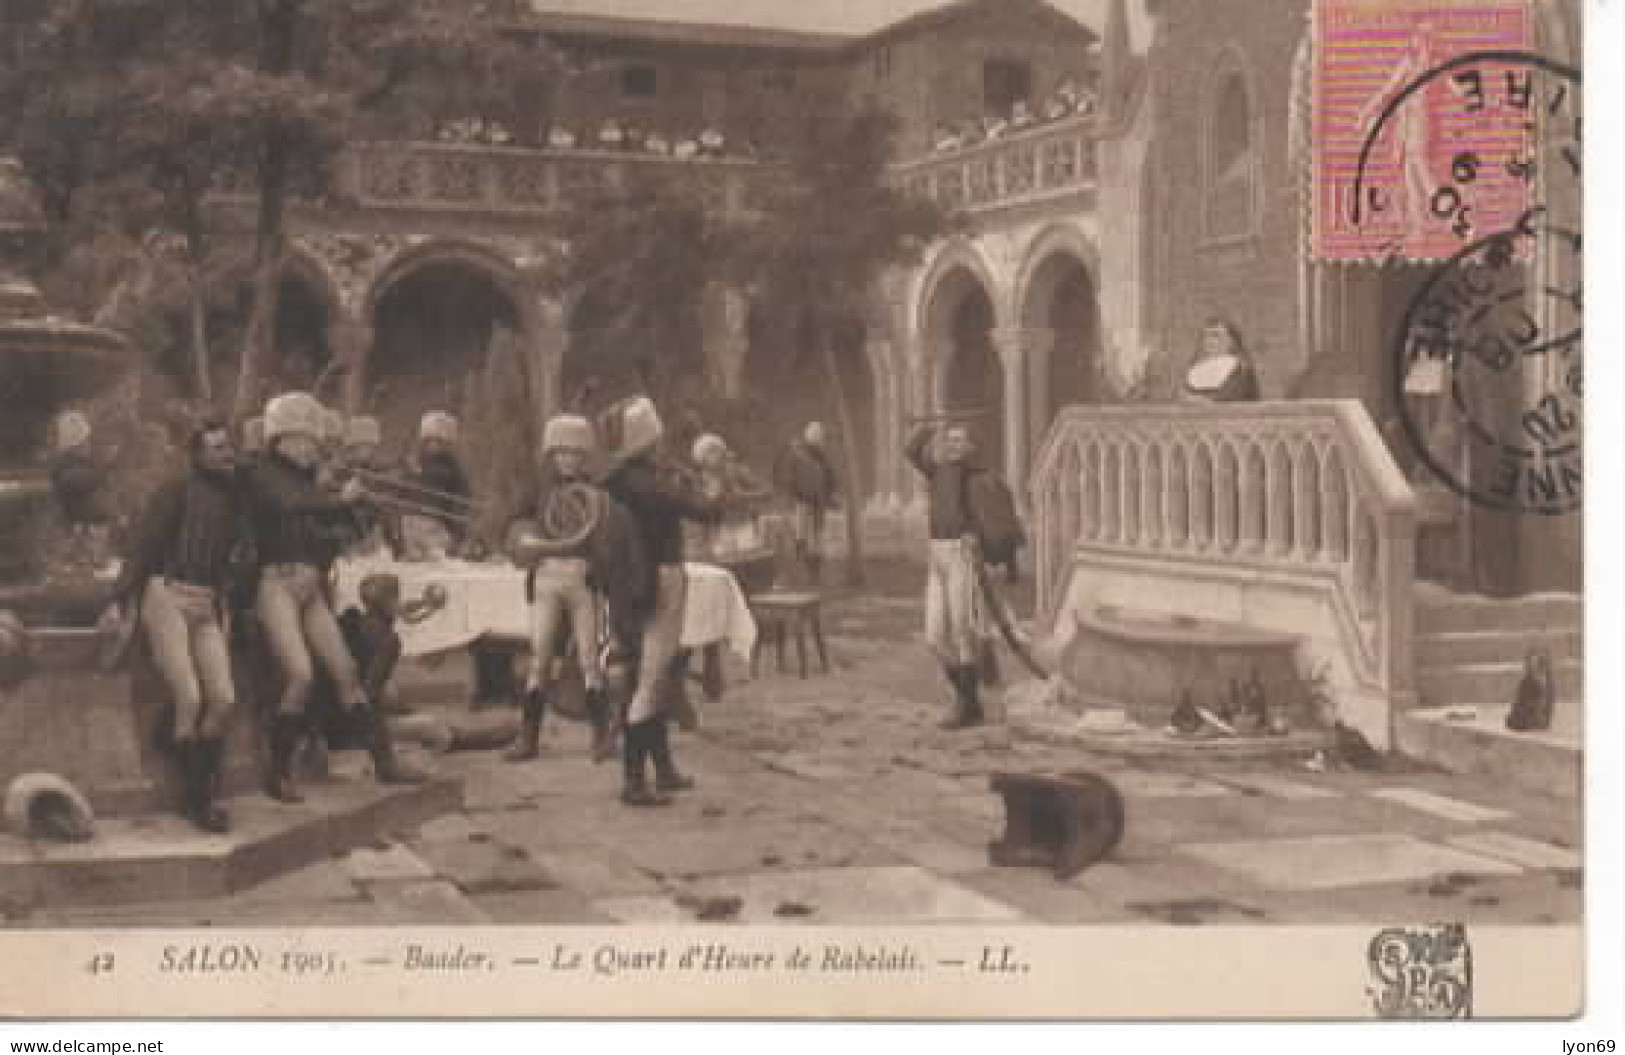 SALON 1905 42 BAADER  LE QUARD  D HEURE  DE RABELAIS - Schilderijen